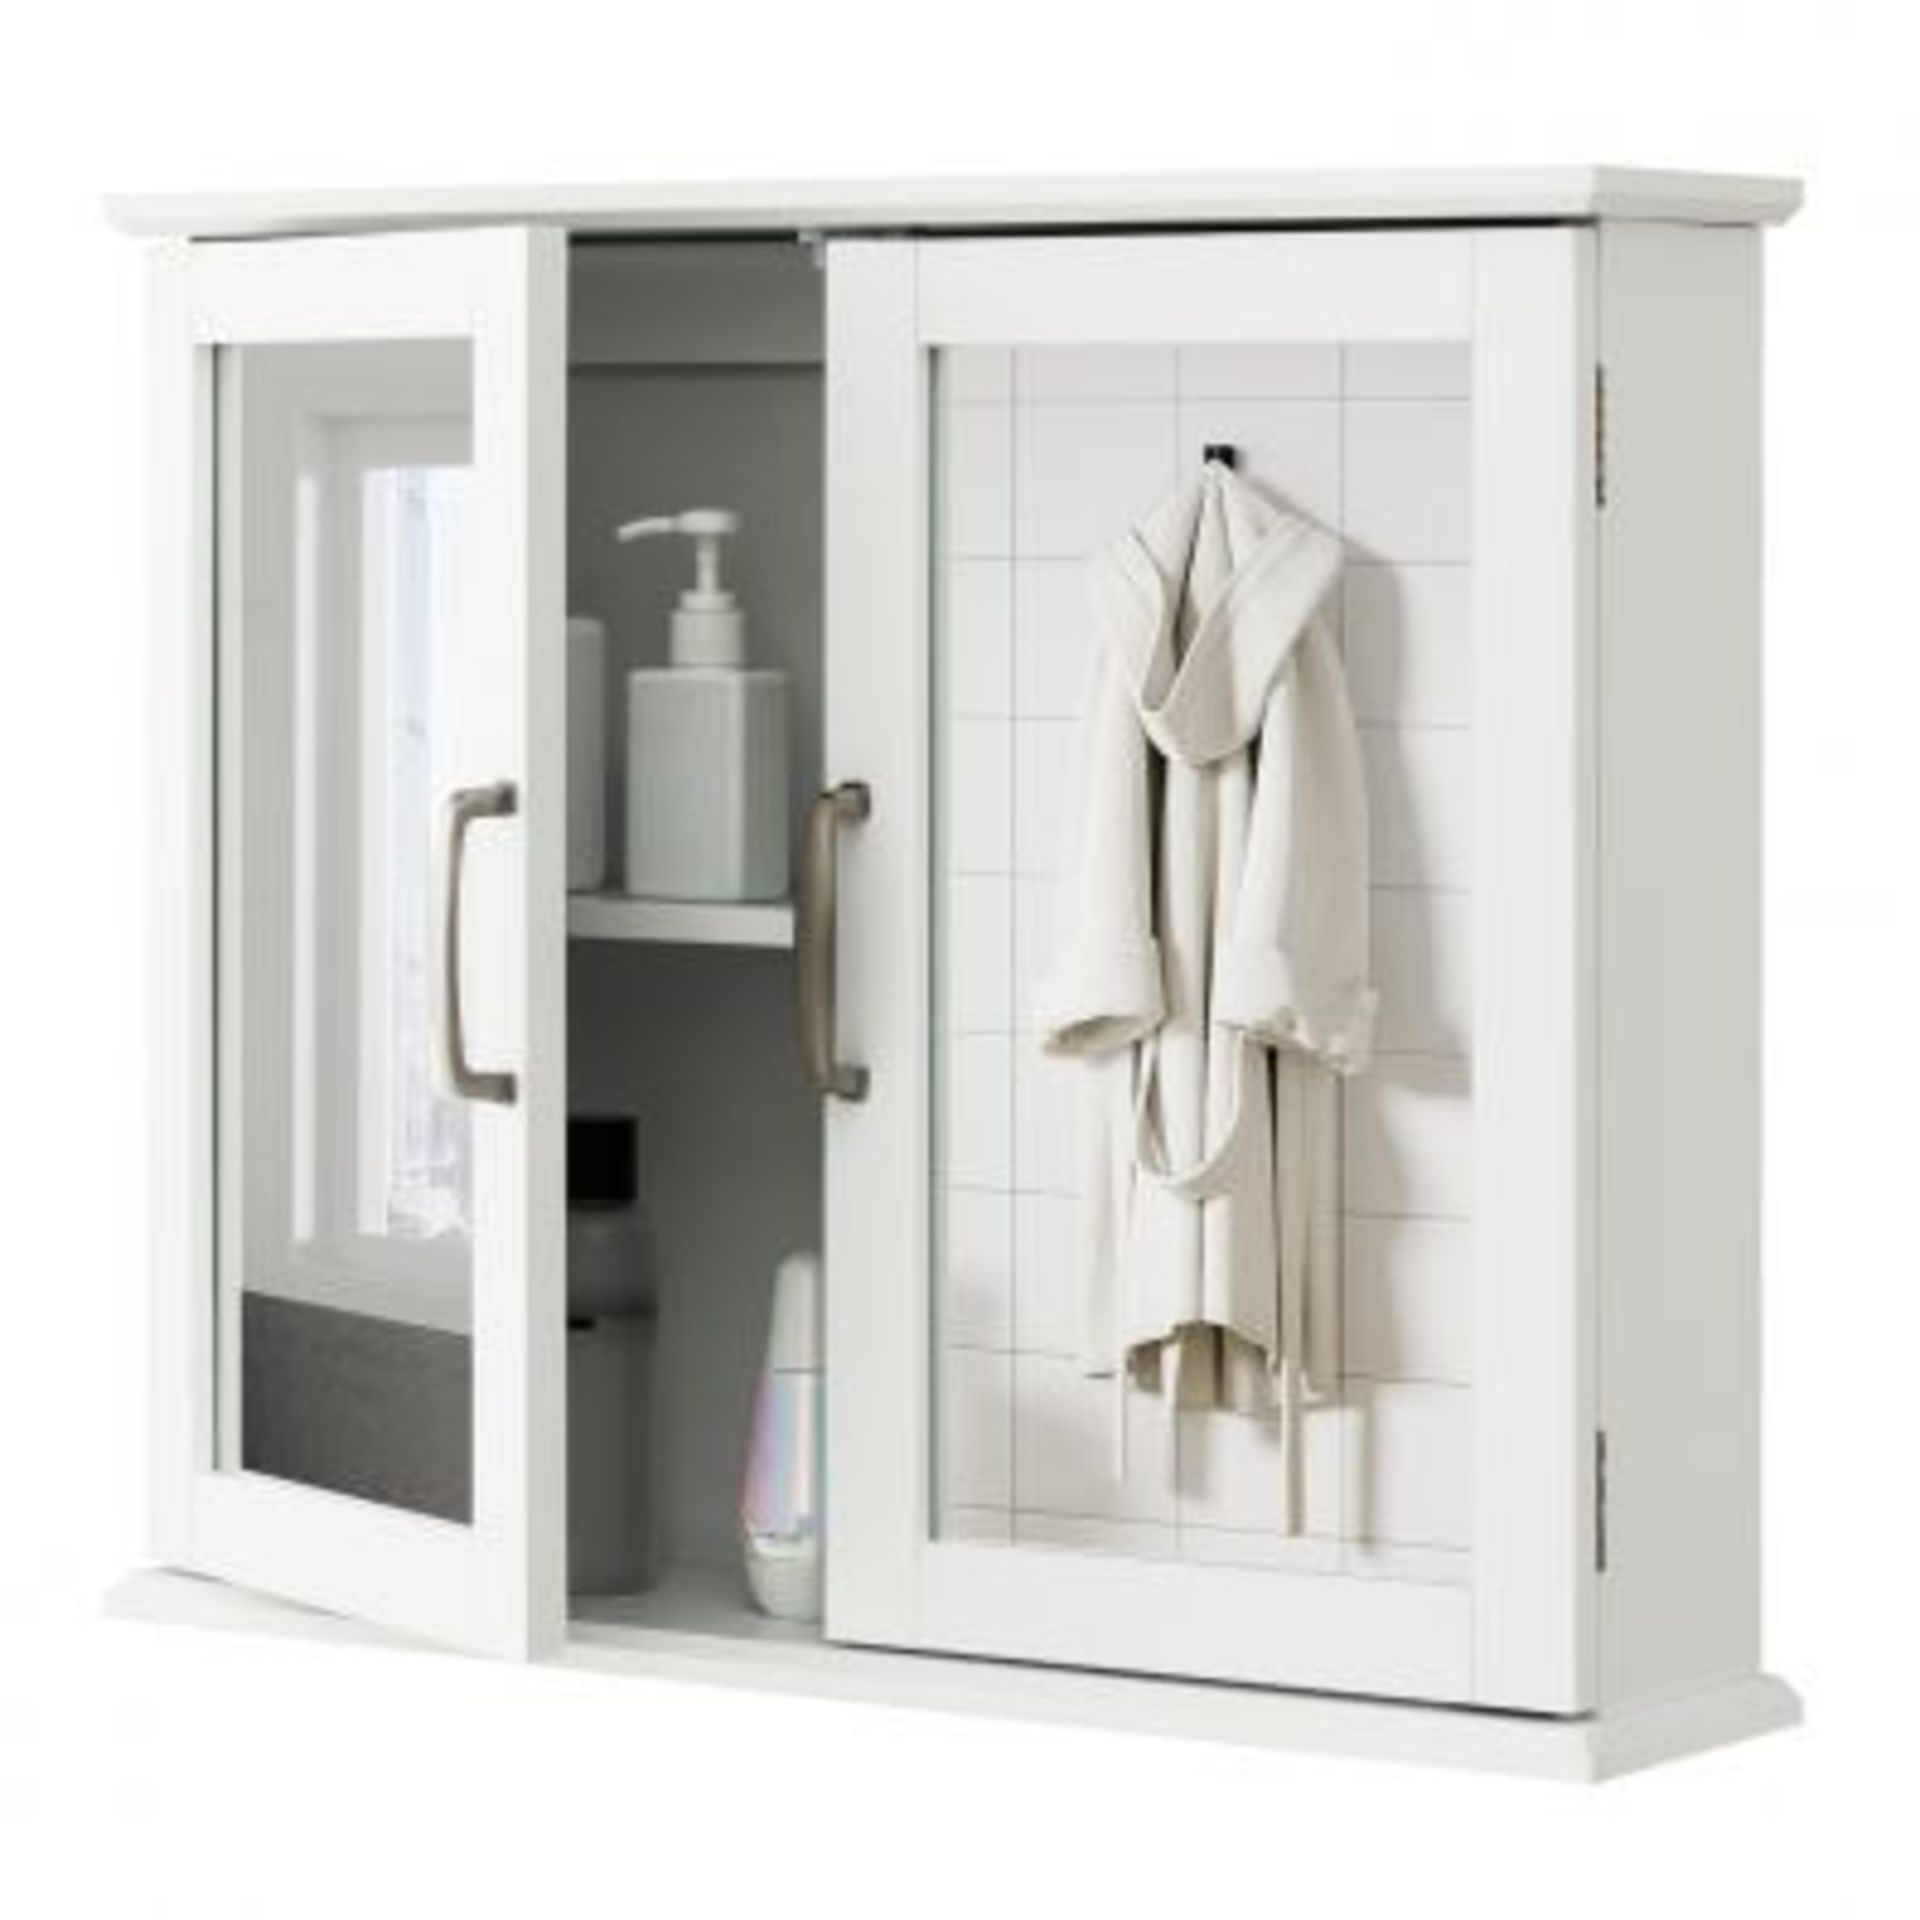 Wall-mounted Bathroom Mirror Cabinet for Bathroom Living Room - ER53